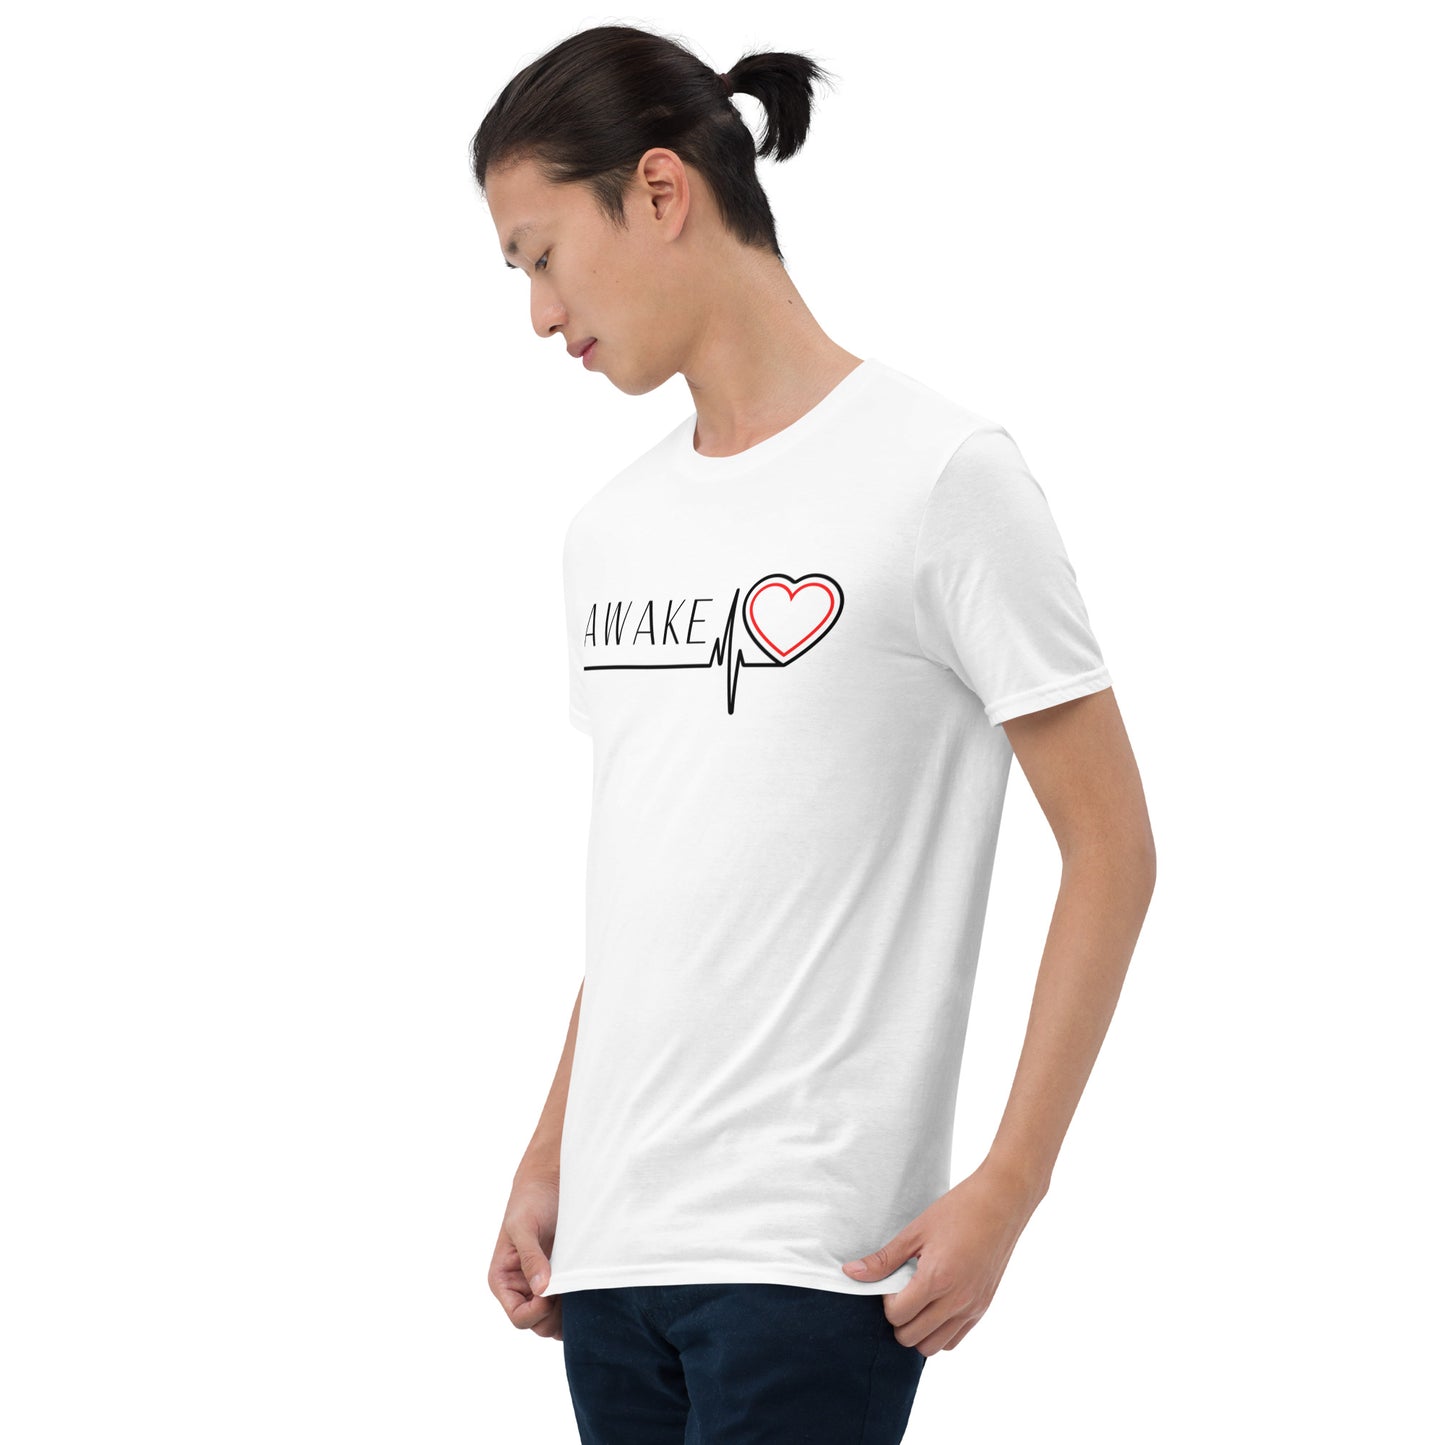 Awake Short-Sleeve Unisex T-Shirt, Motivational Shirt